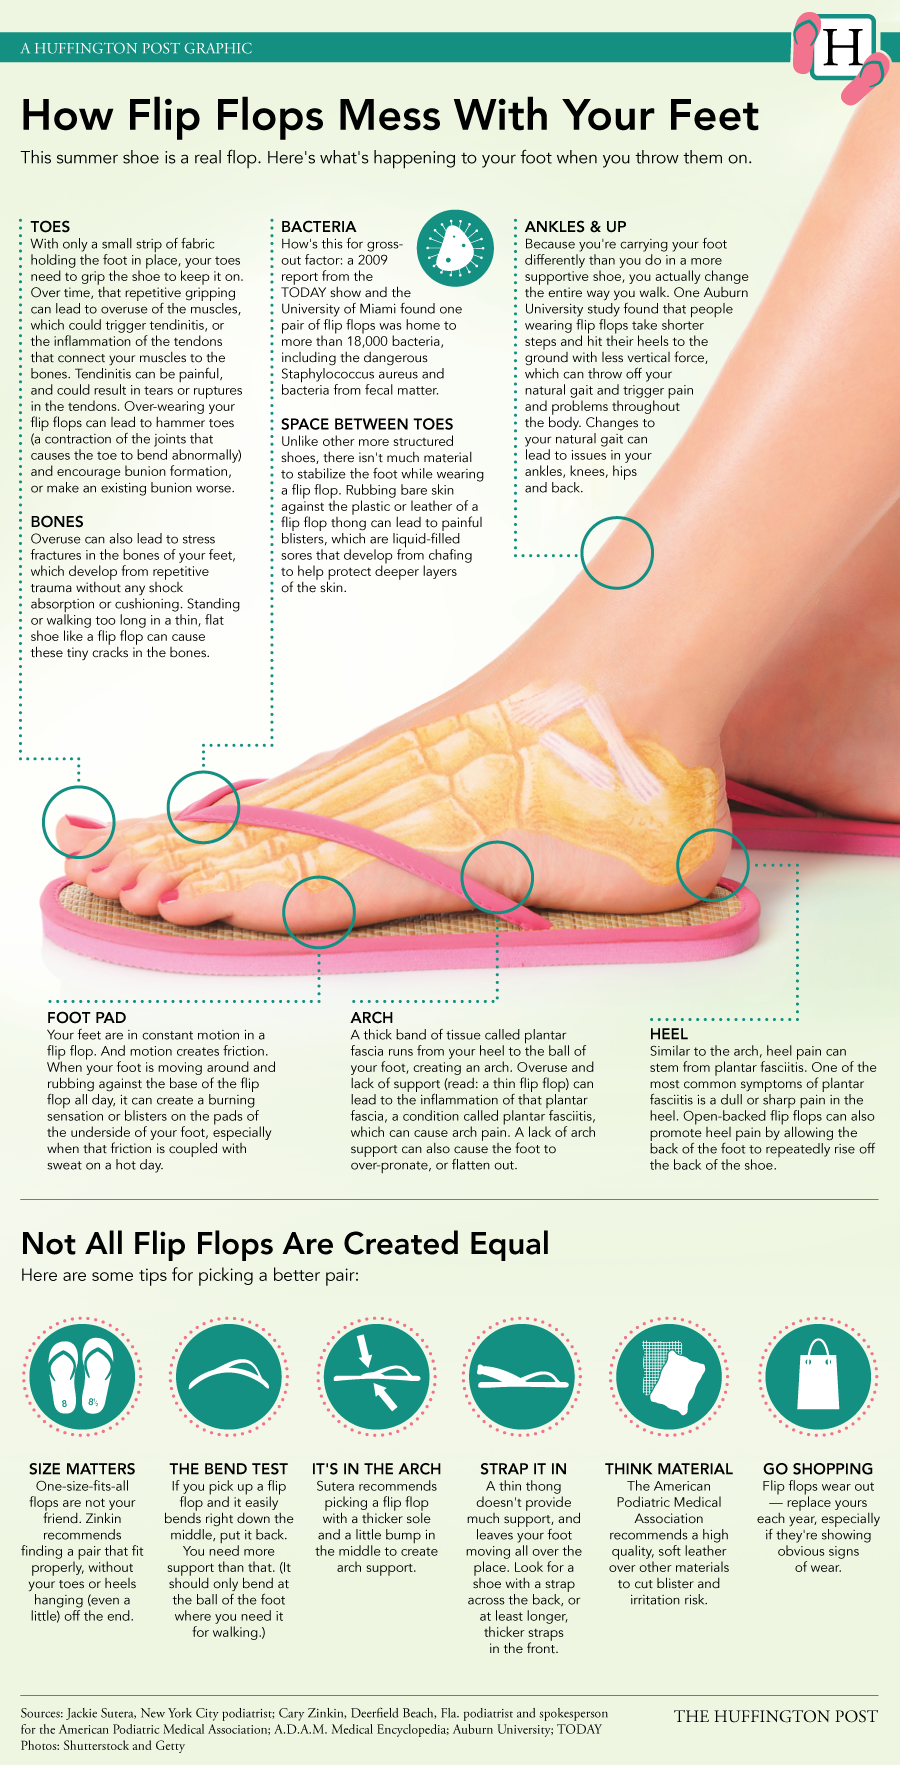 Flip Flops: Do They Hurt Your Feet?